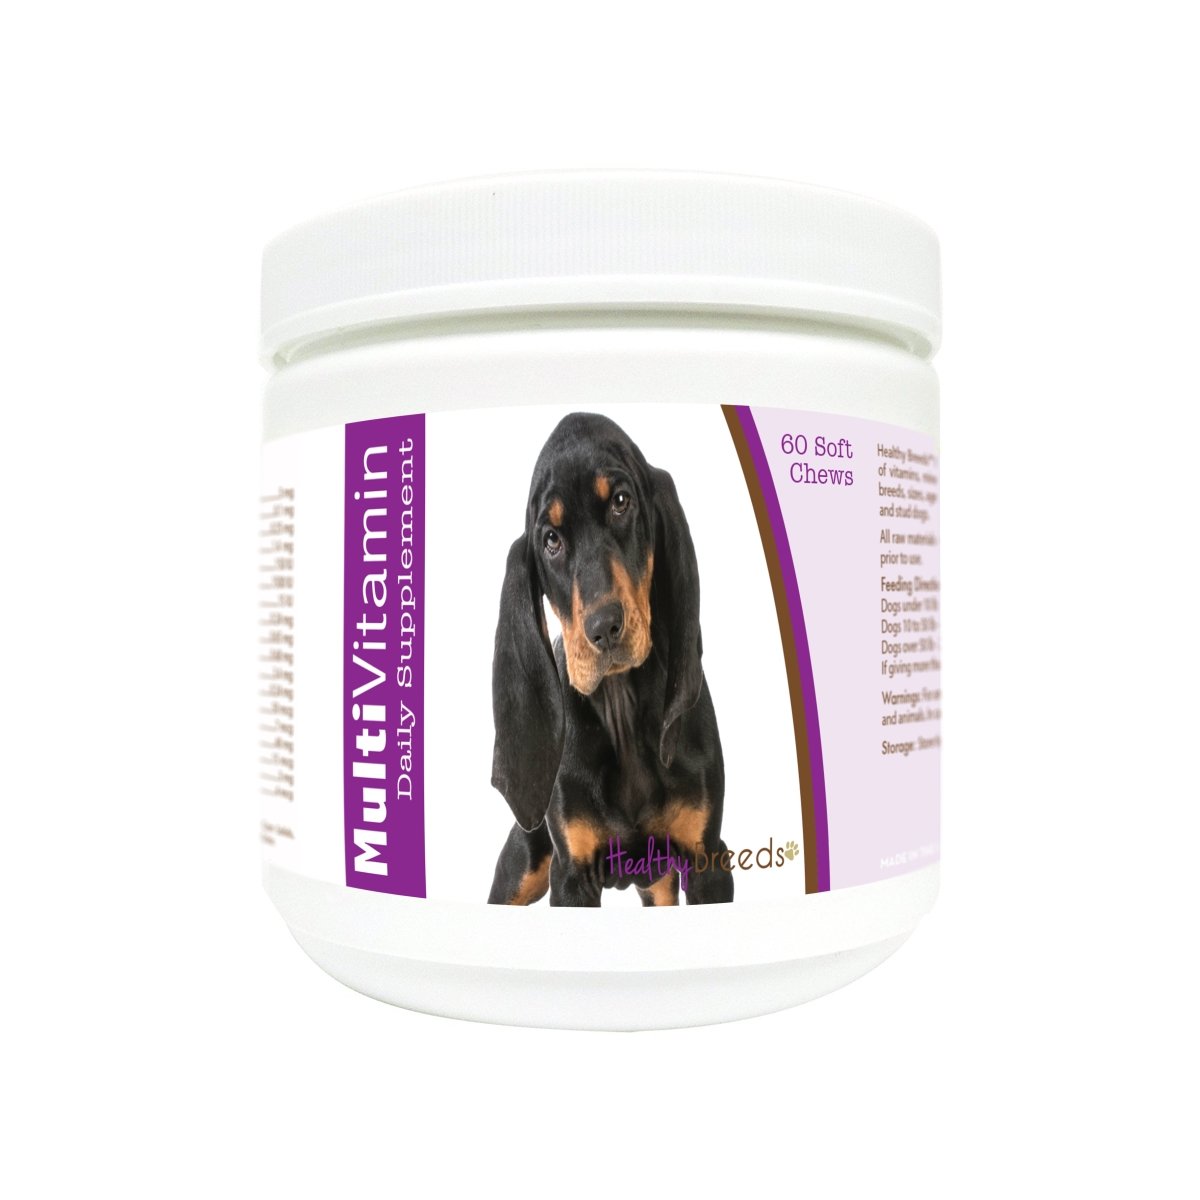 840235174110 Black & Tan Coonhound Multi-vitamin Soft Chews - 60 Count